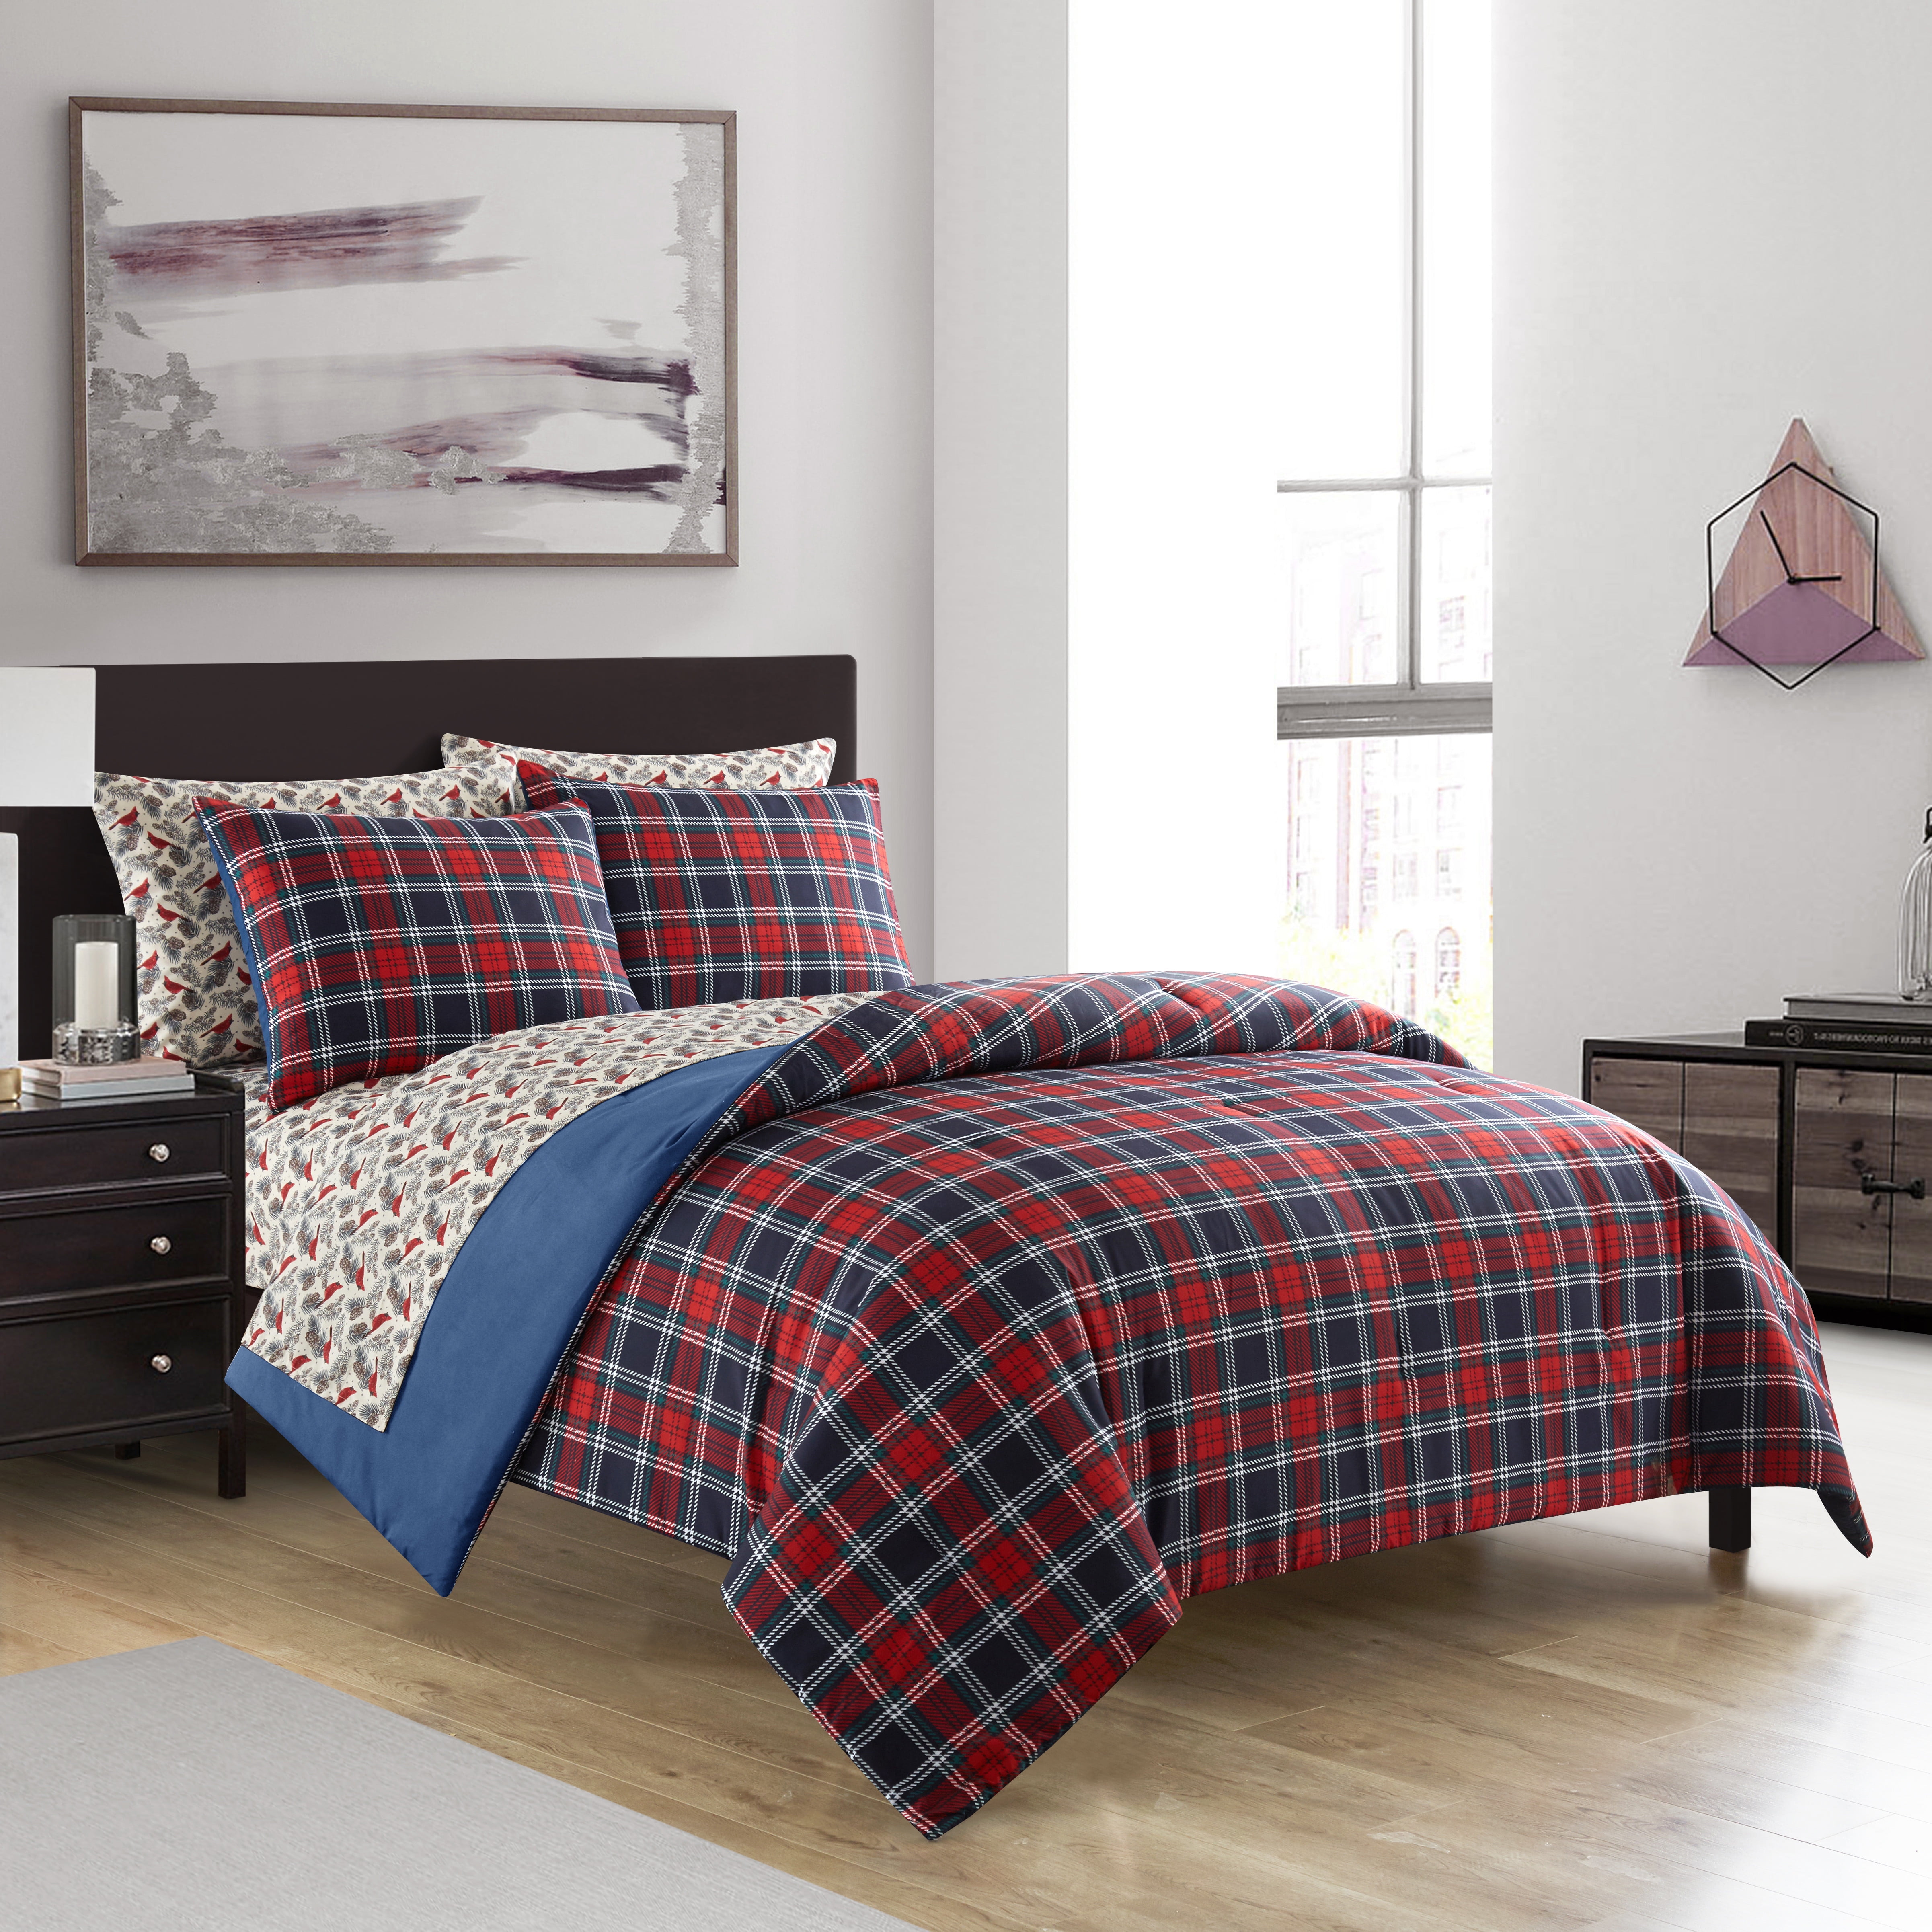 7-Piece Dearfoams Super Soft Red Tartan Plaid Bed in a Bag Bedding Set (Queen) $33.02 + Free S&H w/ Walmart+ or $35+